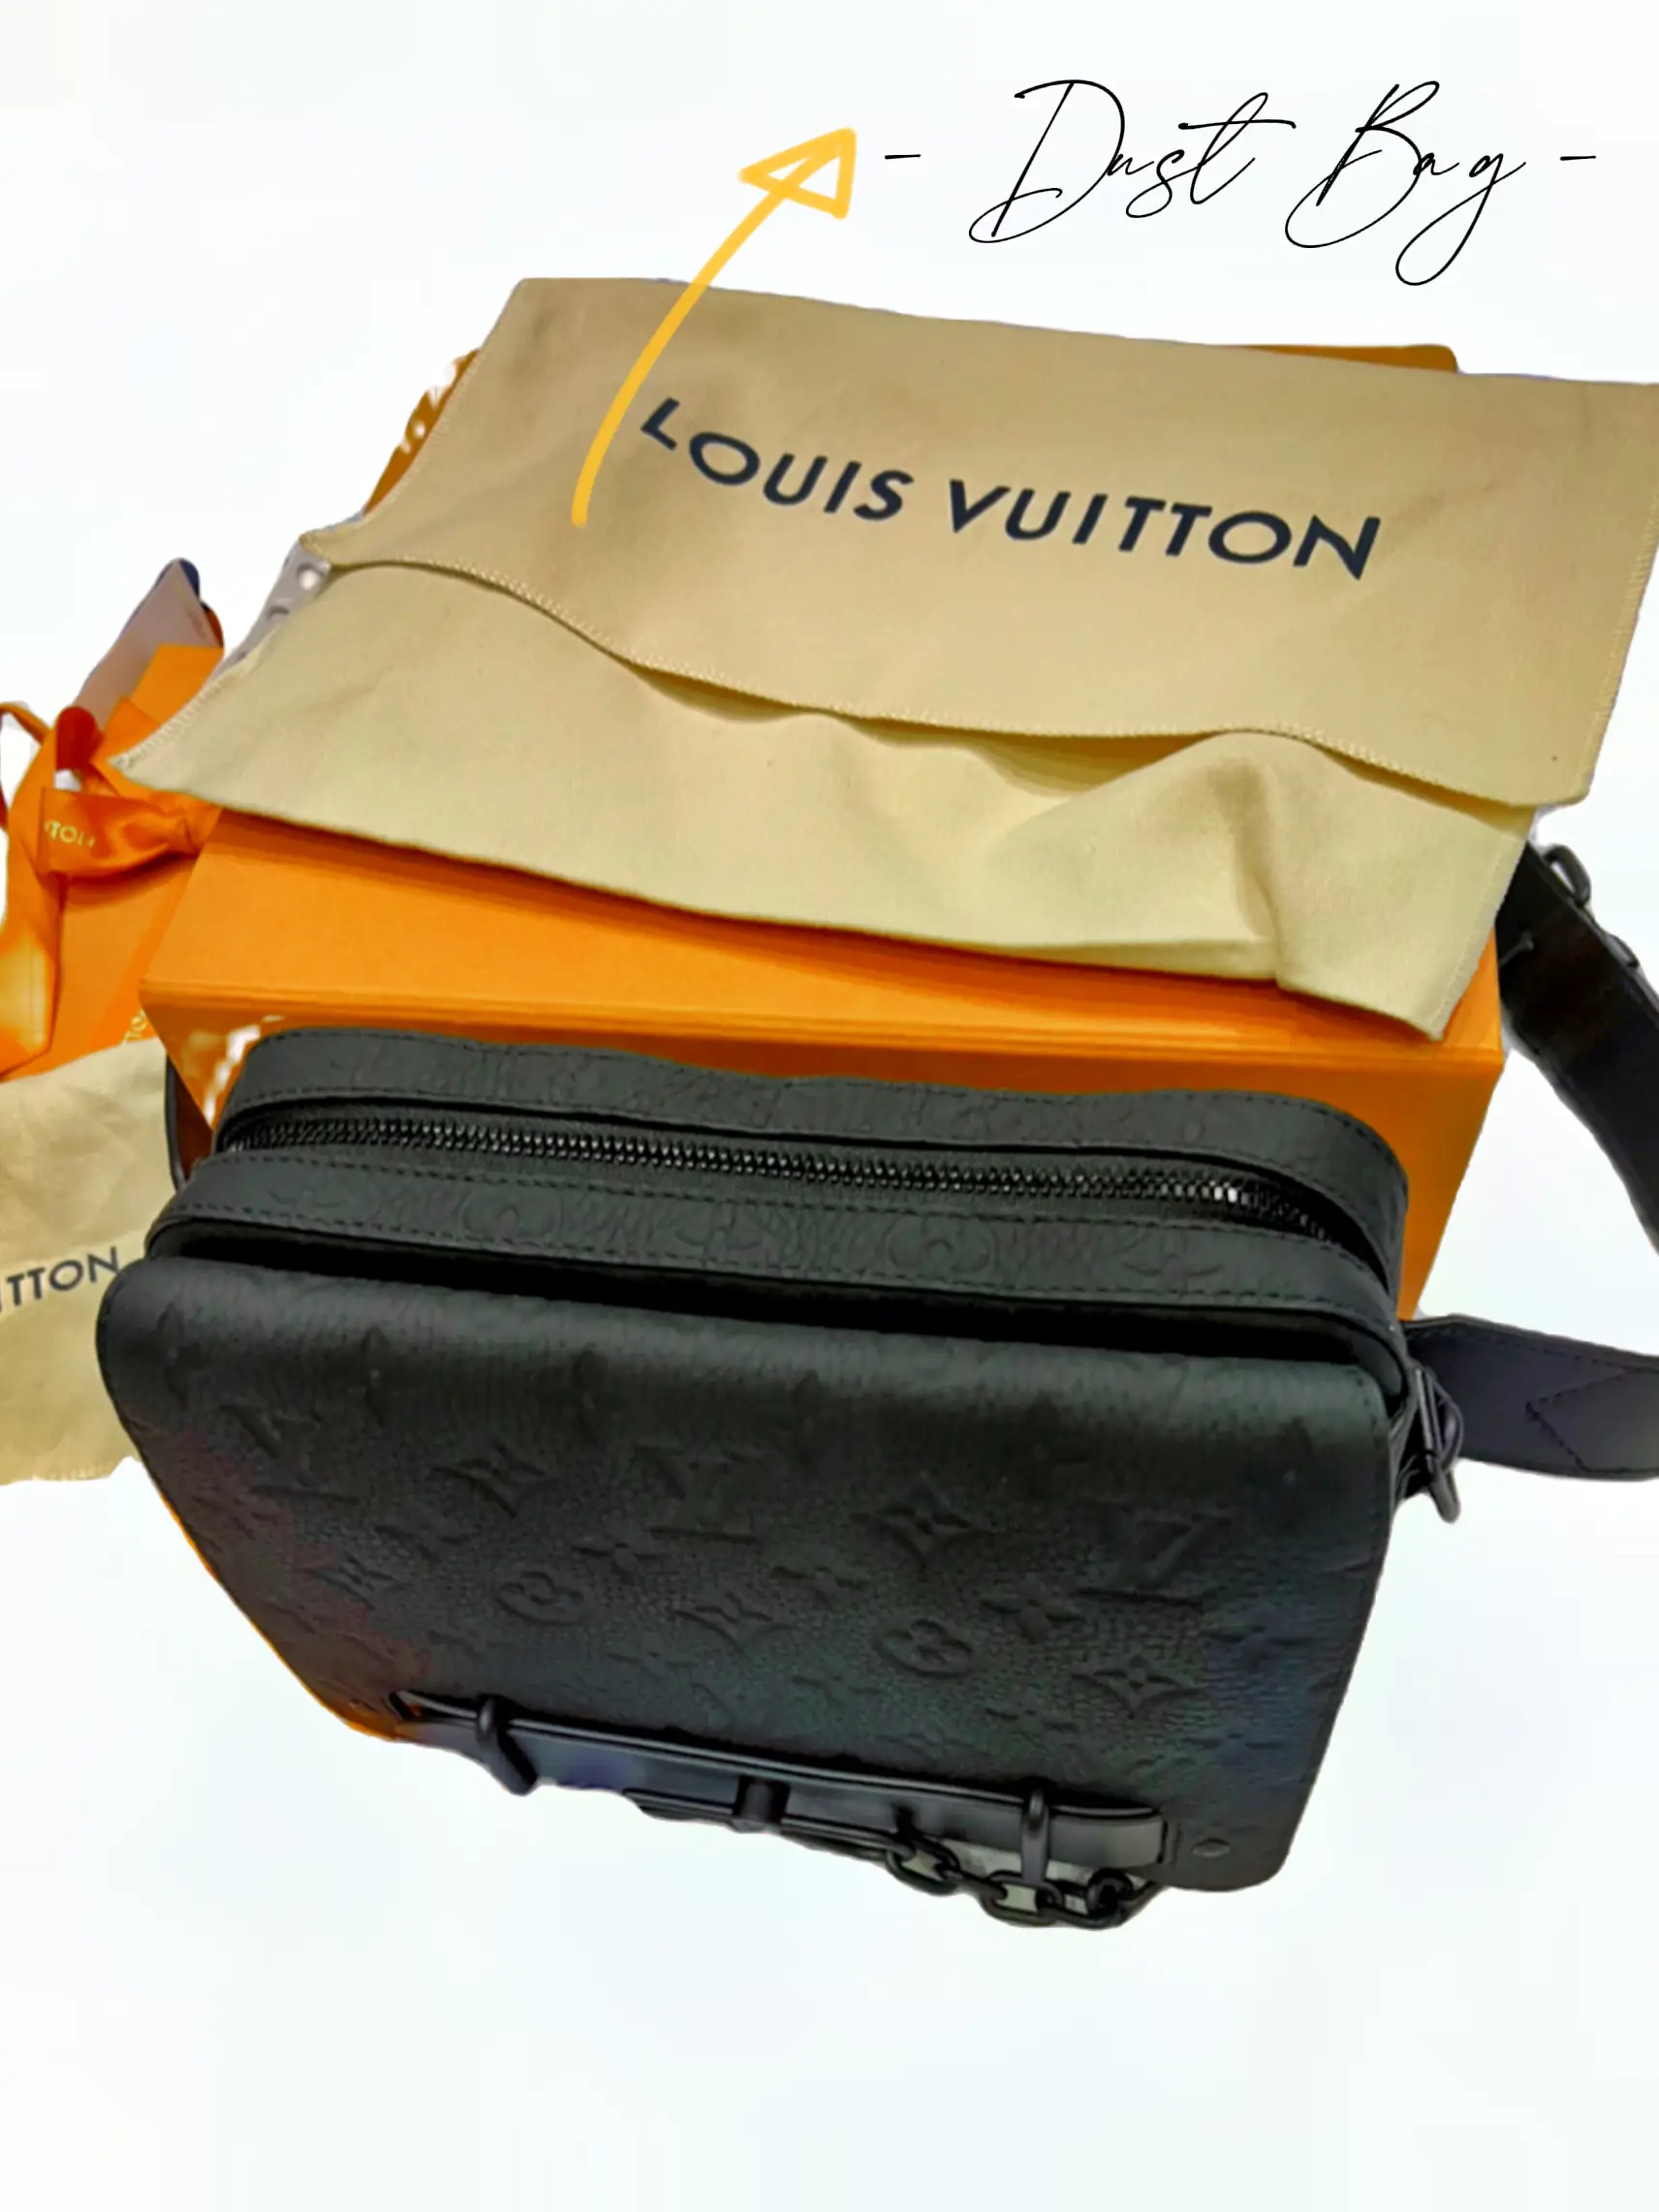 Is Louis Vuitton Cheaper In Singapore Or Australia